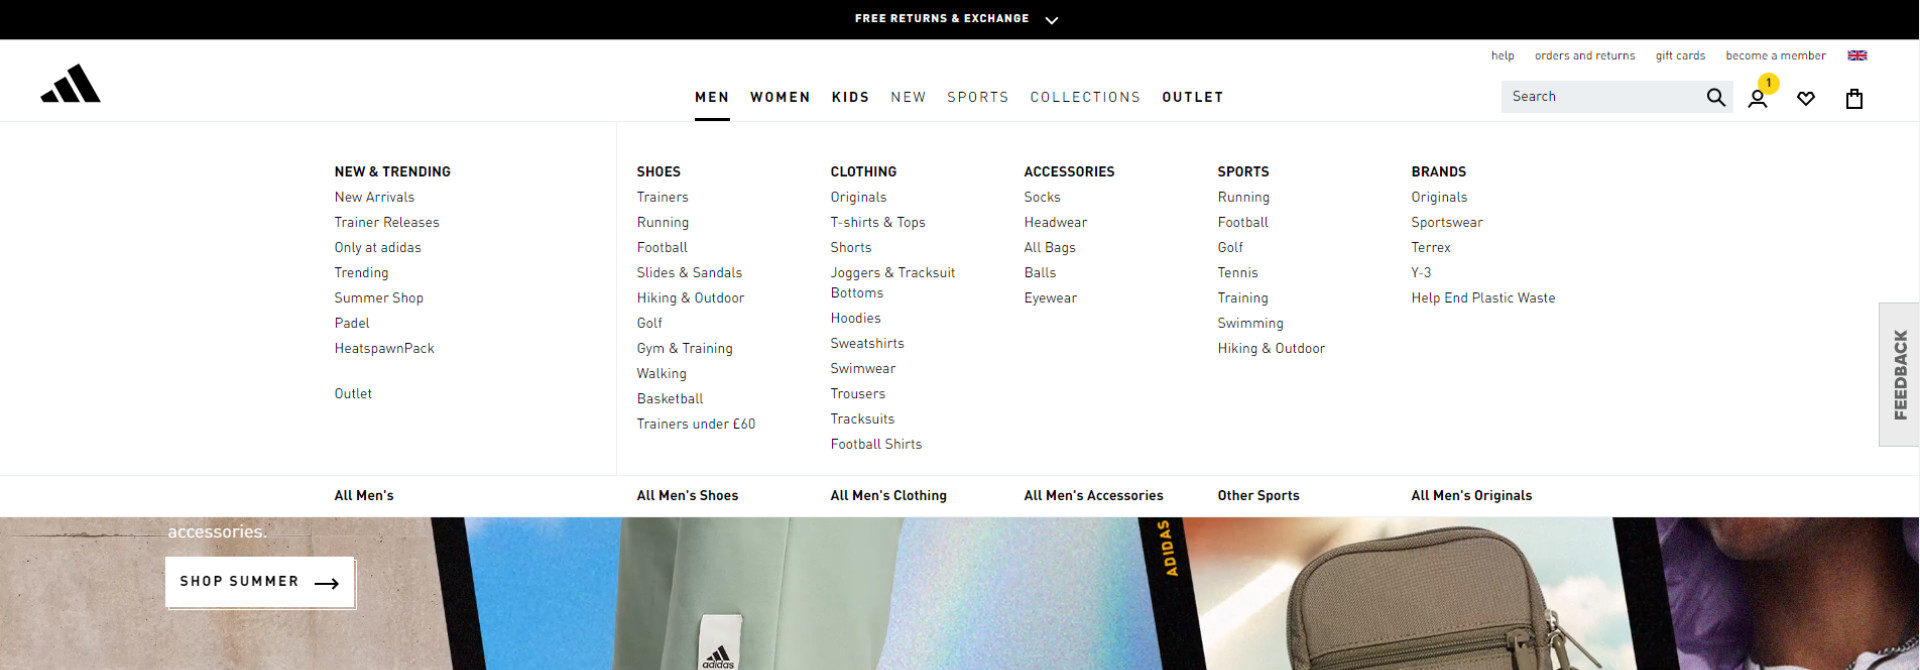 Mega menu w sklepie internetowym Adidas